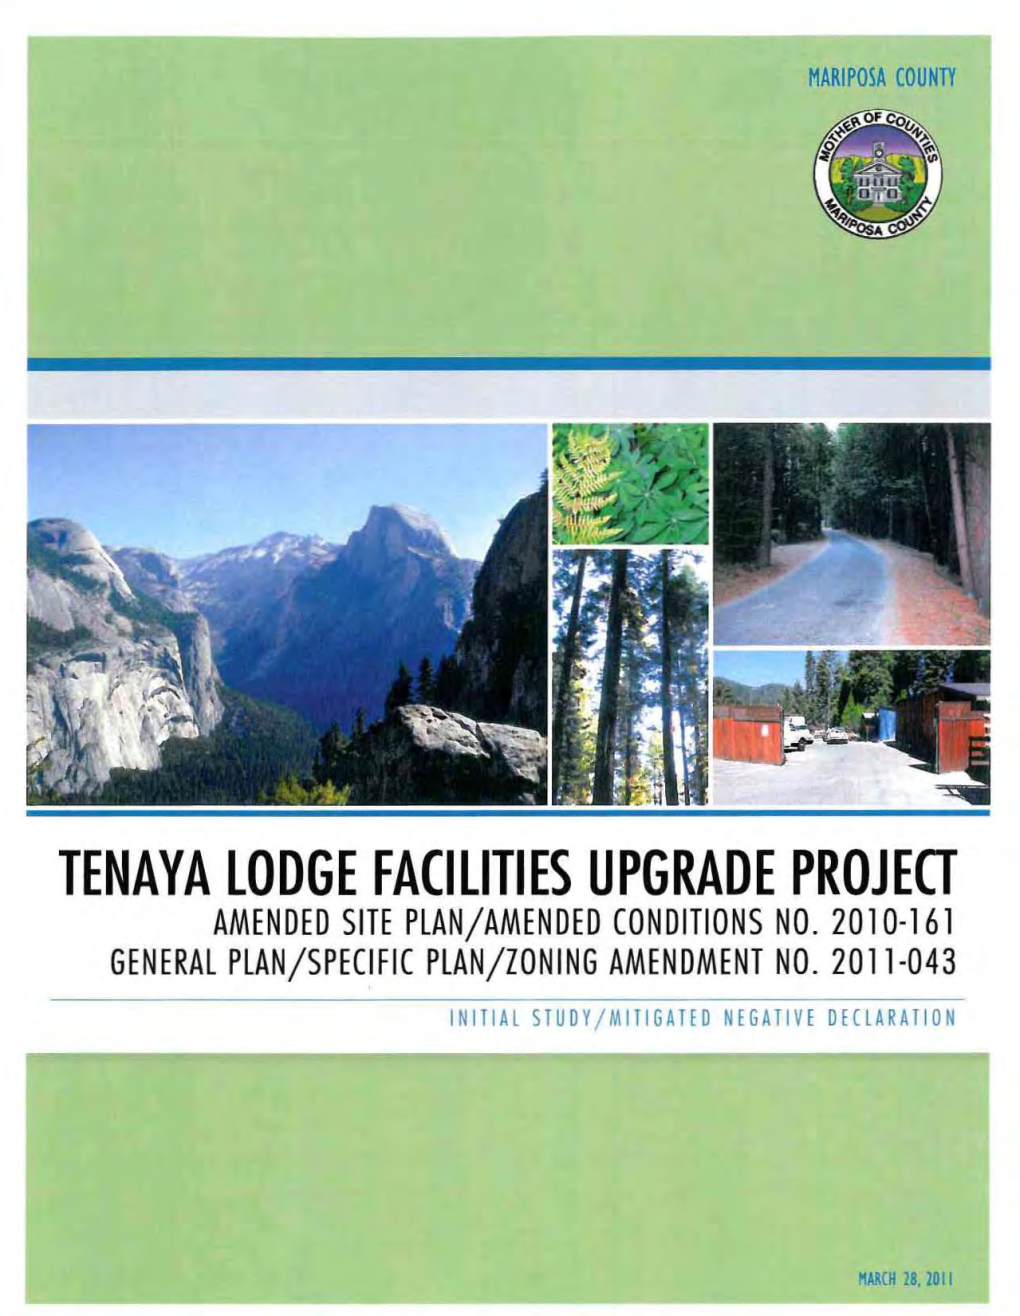 Tenaya Lodge Facilities Upgrade Projeg Amended Site Plan/Amended Conditions No